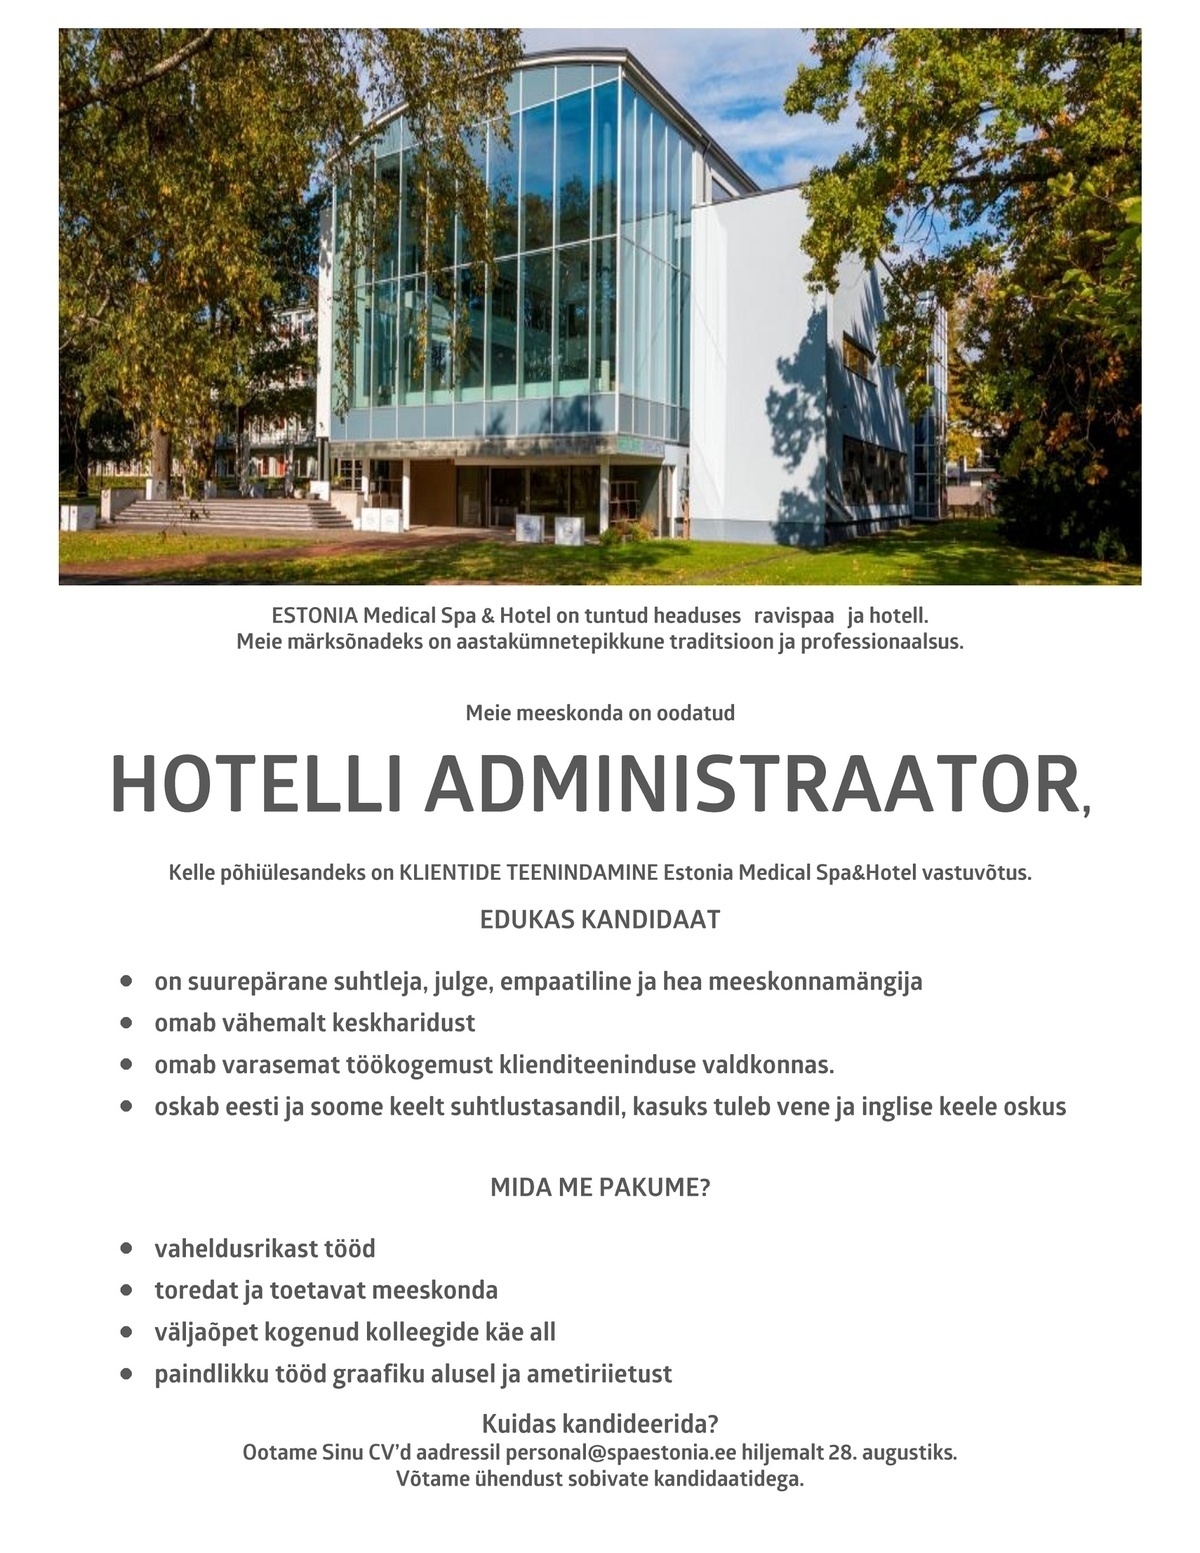 Estonia Spa Hotels AS Hotelli administraator ESTONIA Medical Spa & Hotel´is